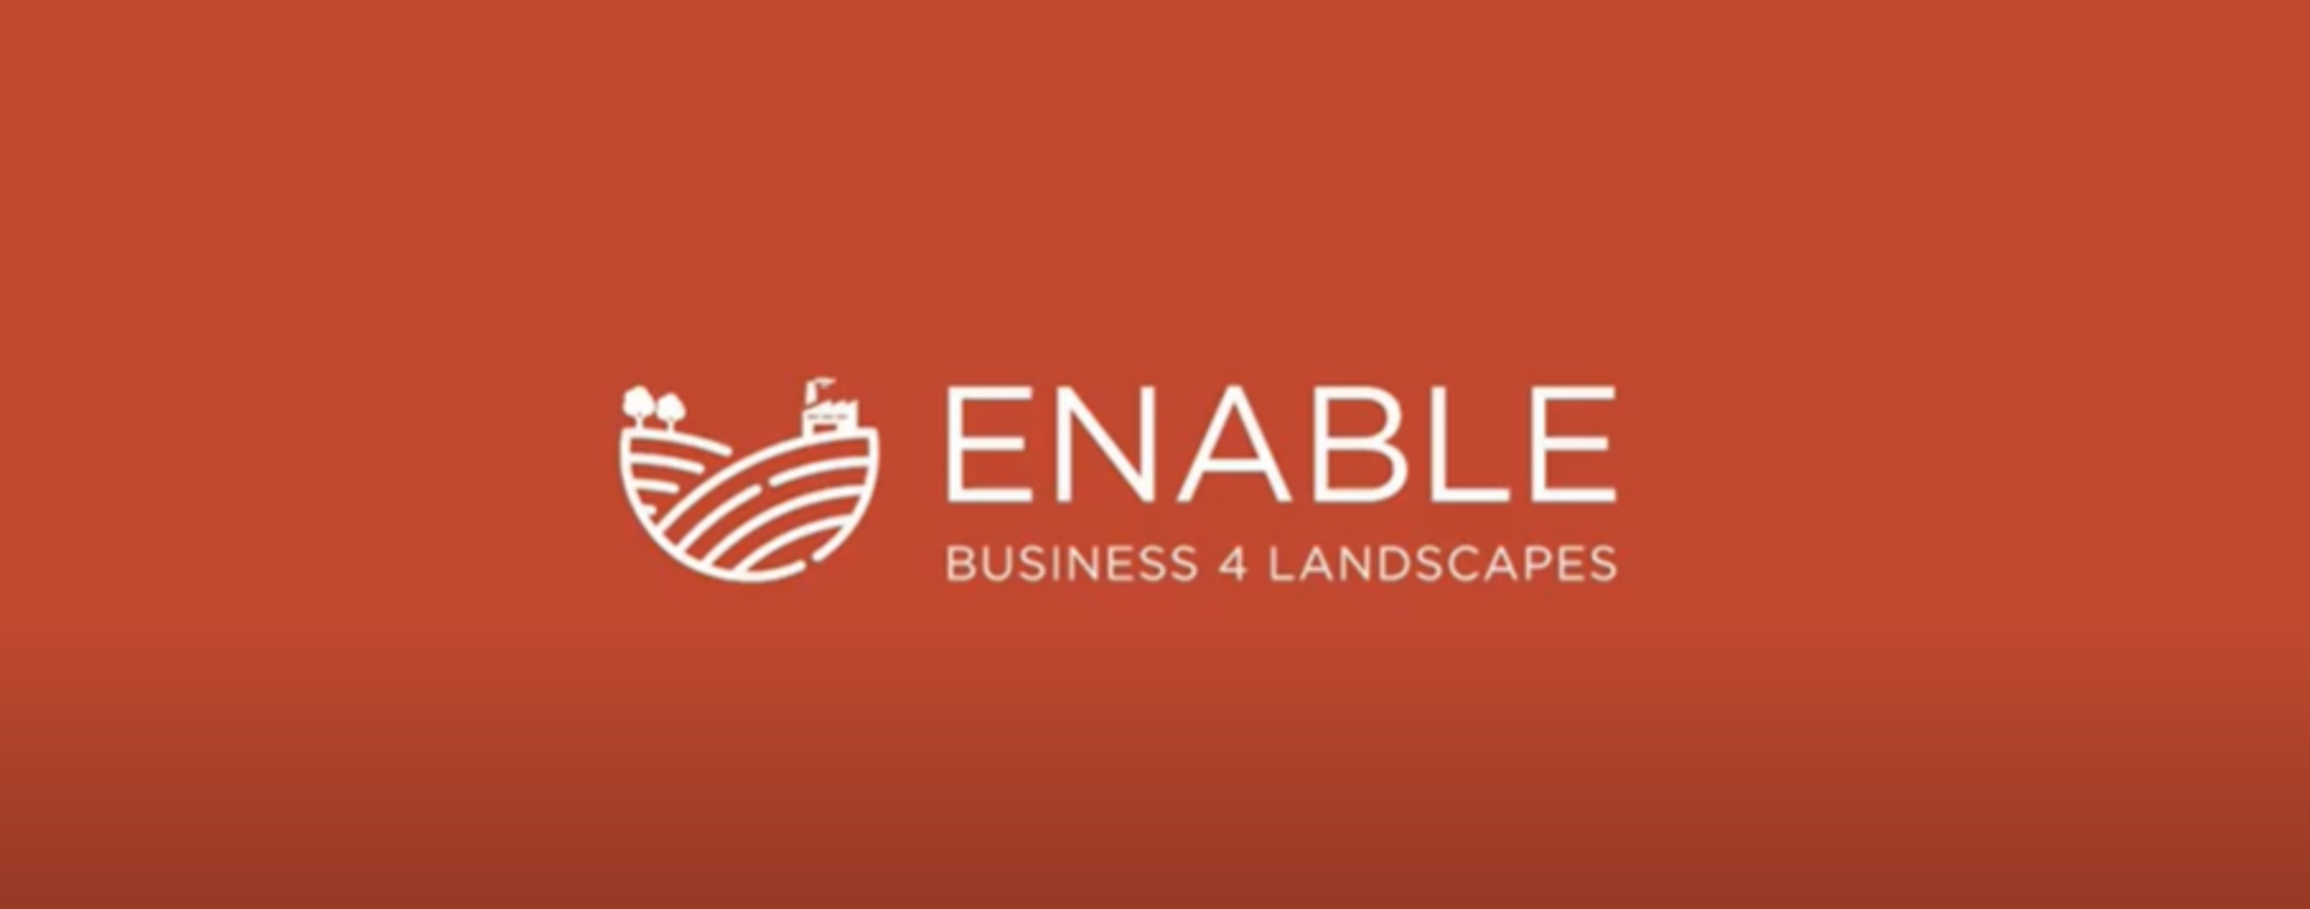 ENABLE logo